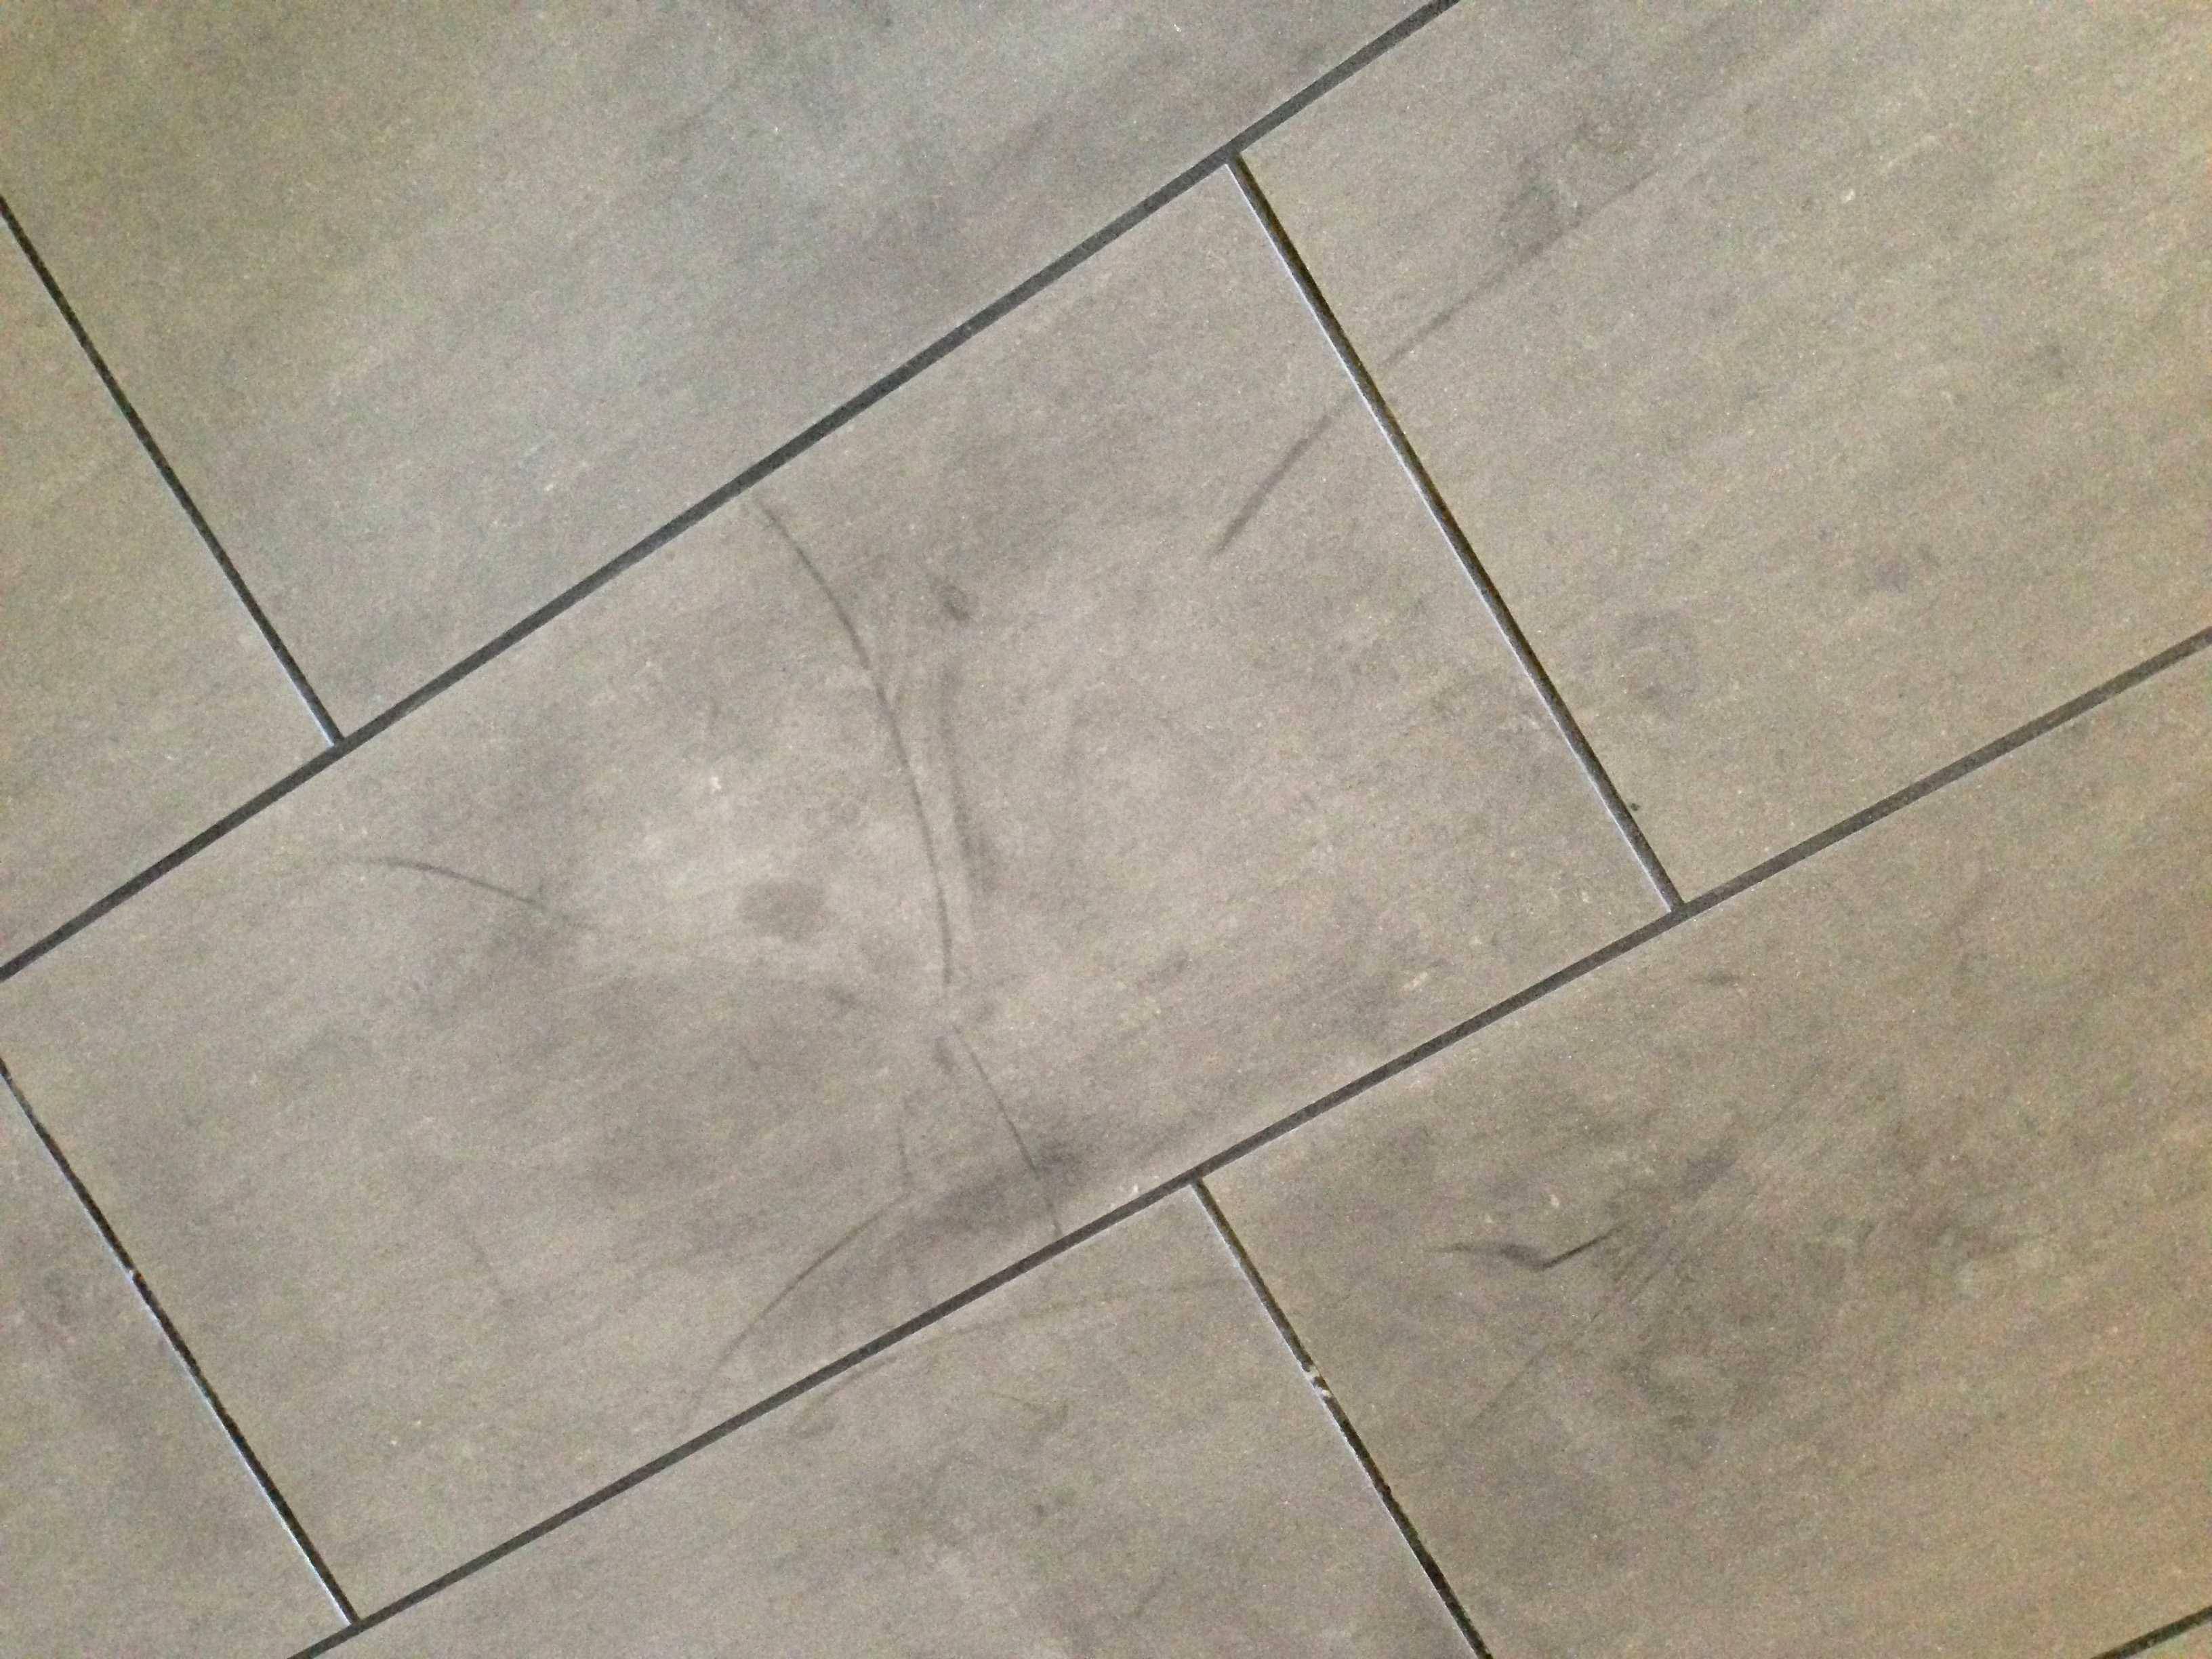 Light floor tiles with ebony grout